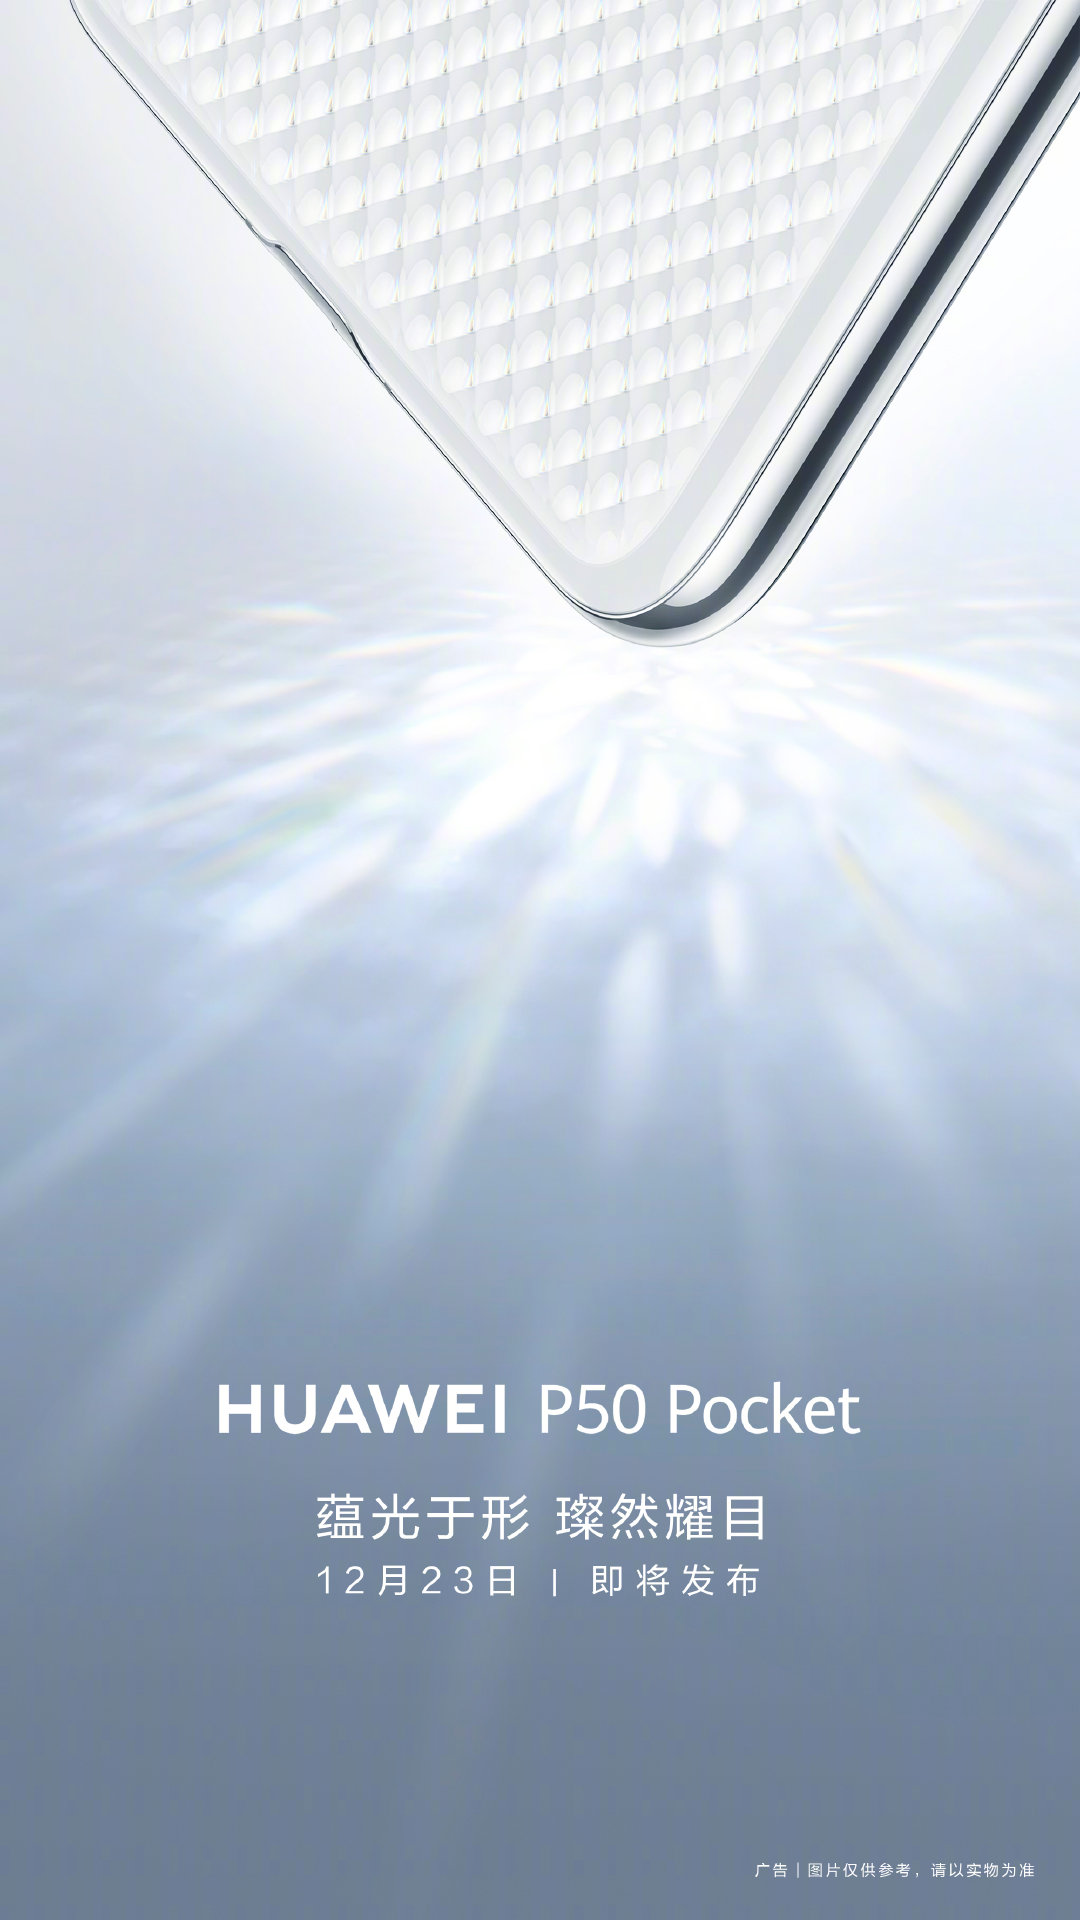 Huawei P50 Pocket teaser 02